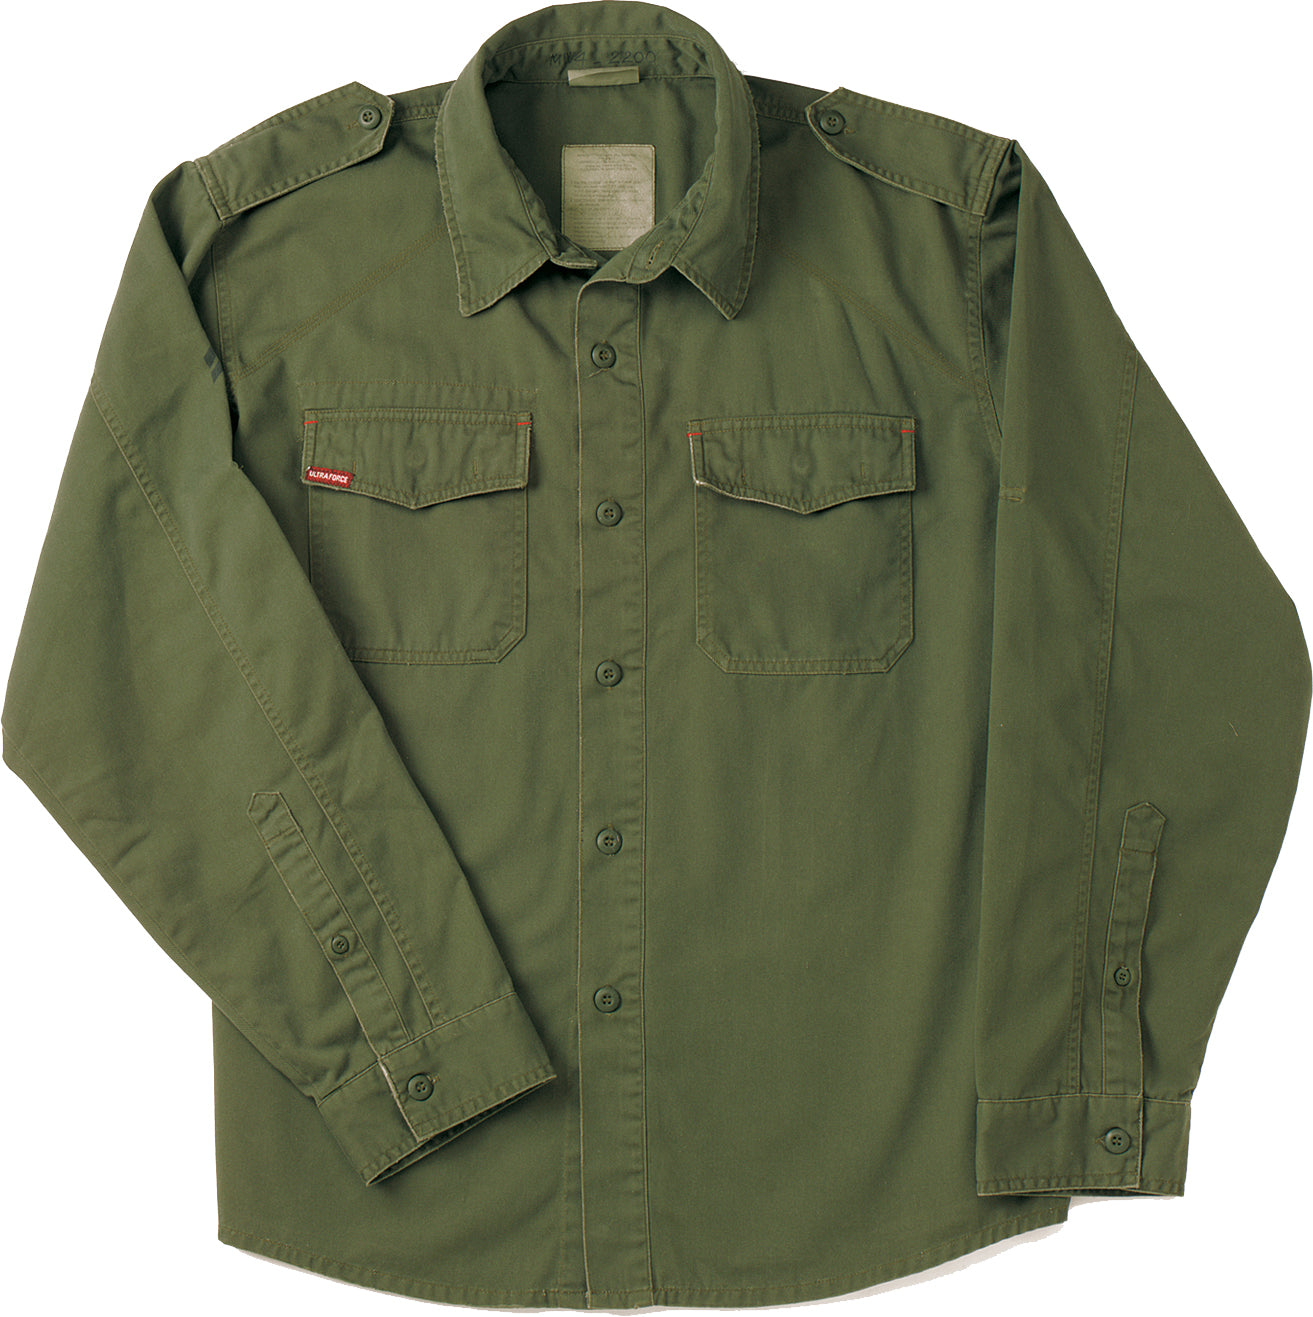 Olive Drab - Military Vintage Fatigue Shirt